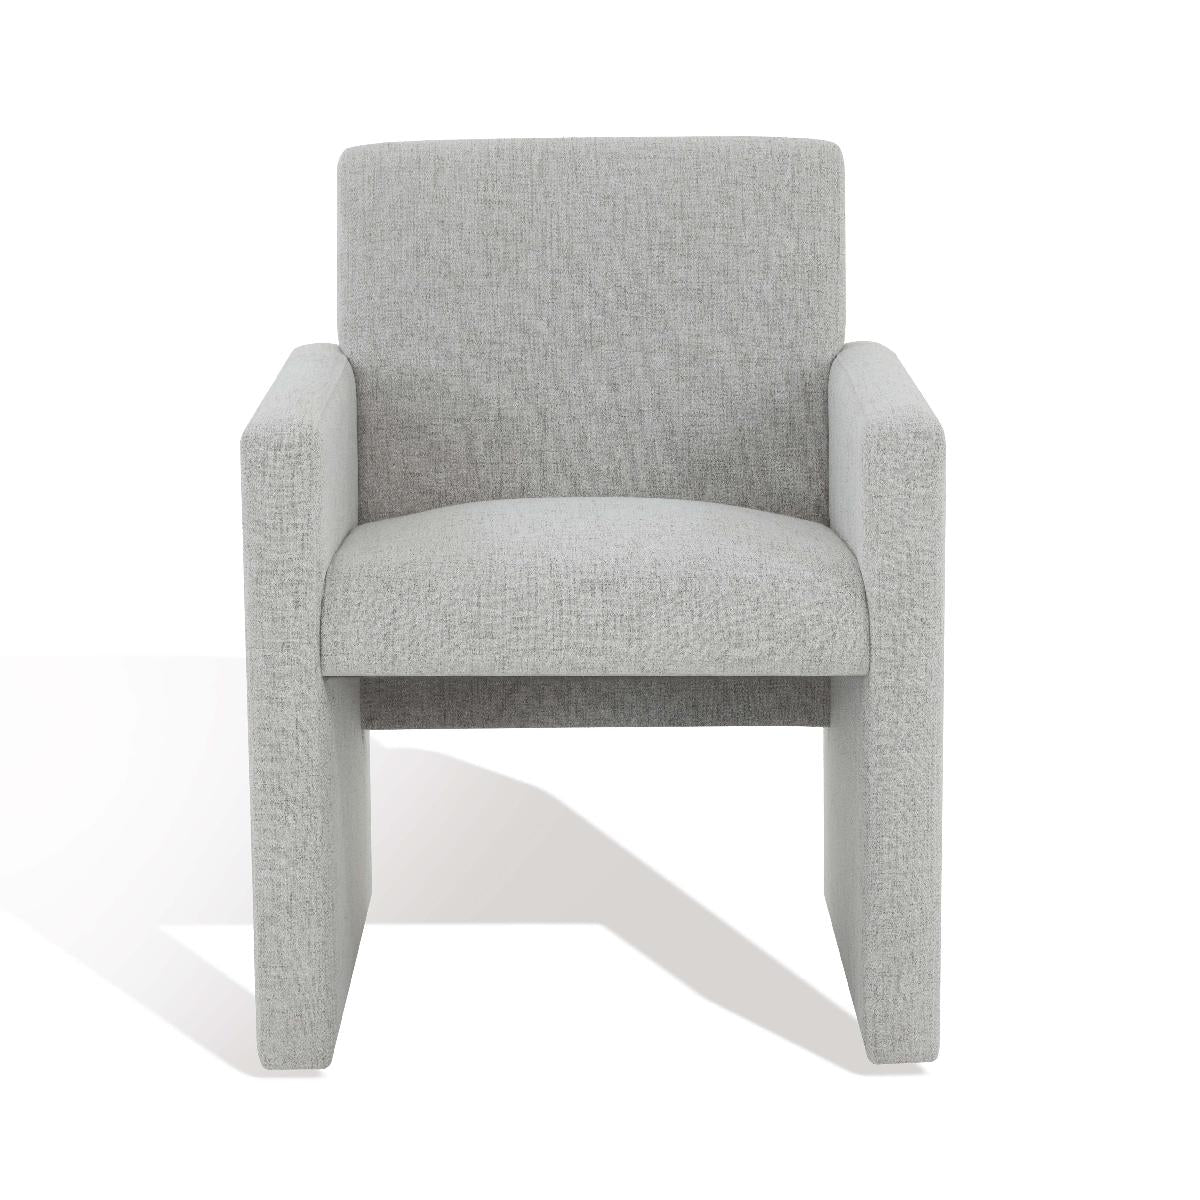 Safavieh Couture Maisey Linen Arm Chair